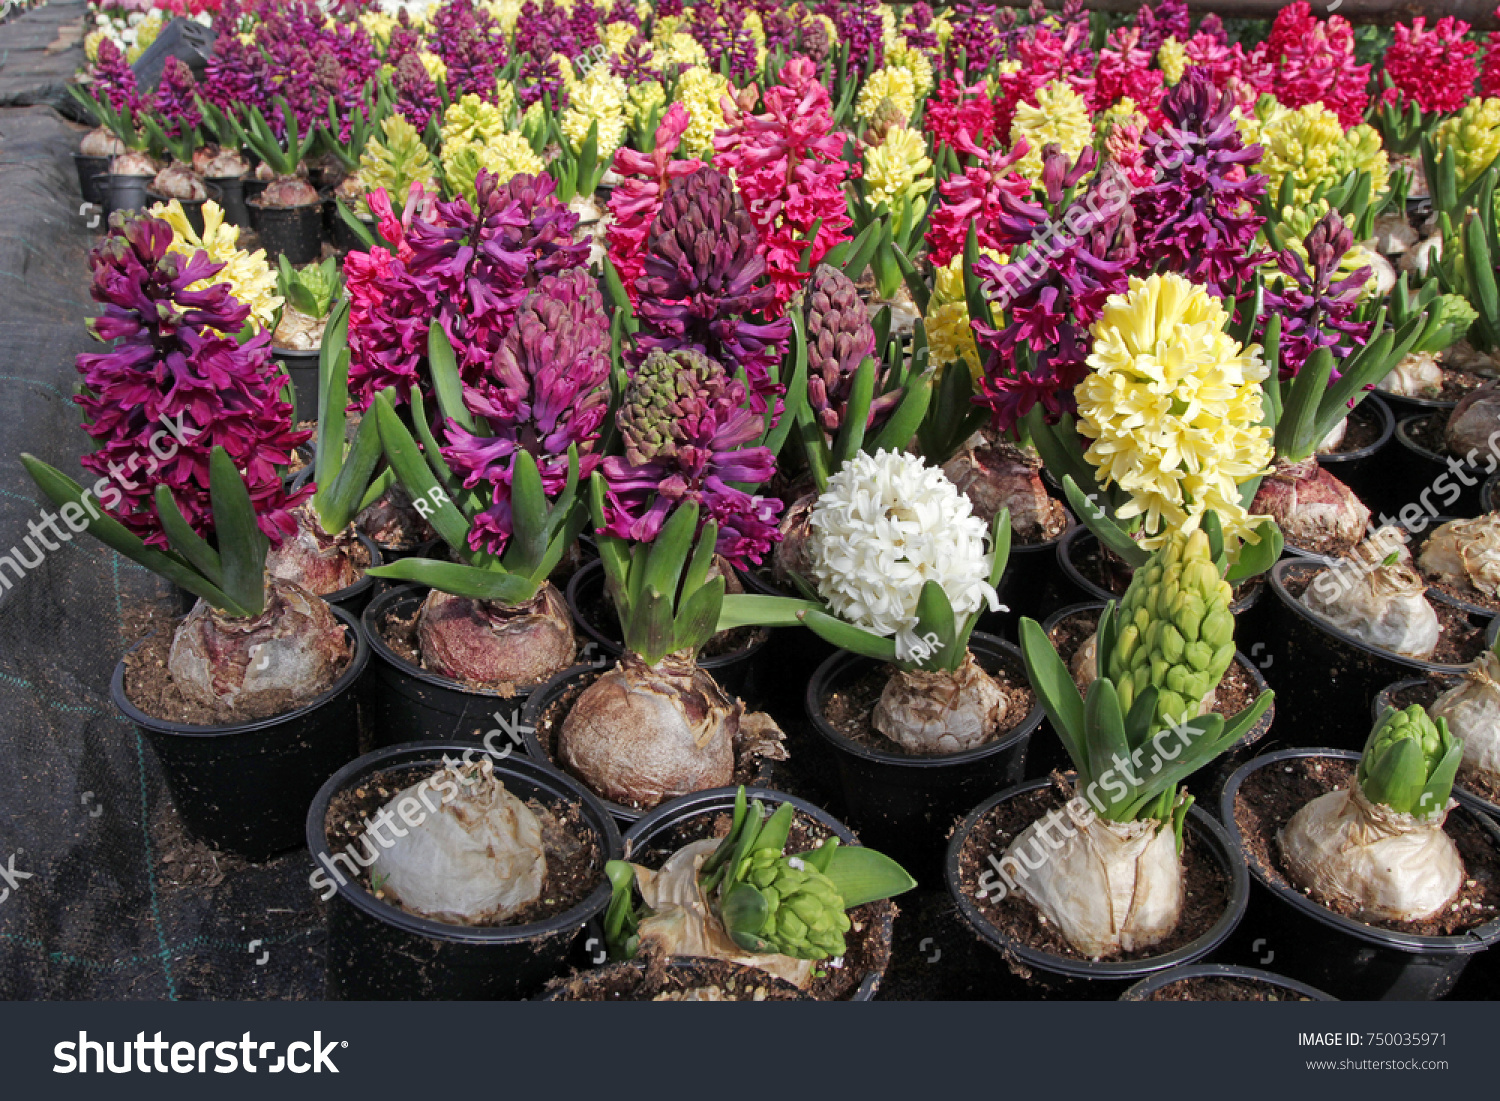 Hyacinths bulbs Images, Stock Photos & Vectors   Shutterstock